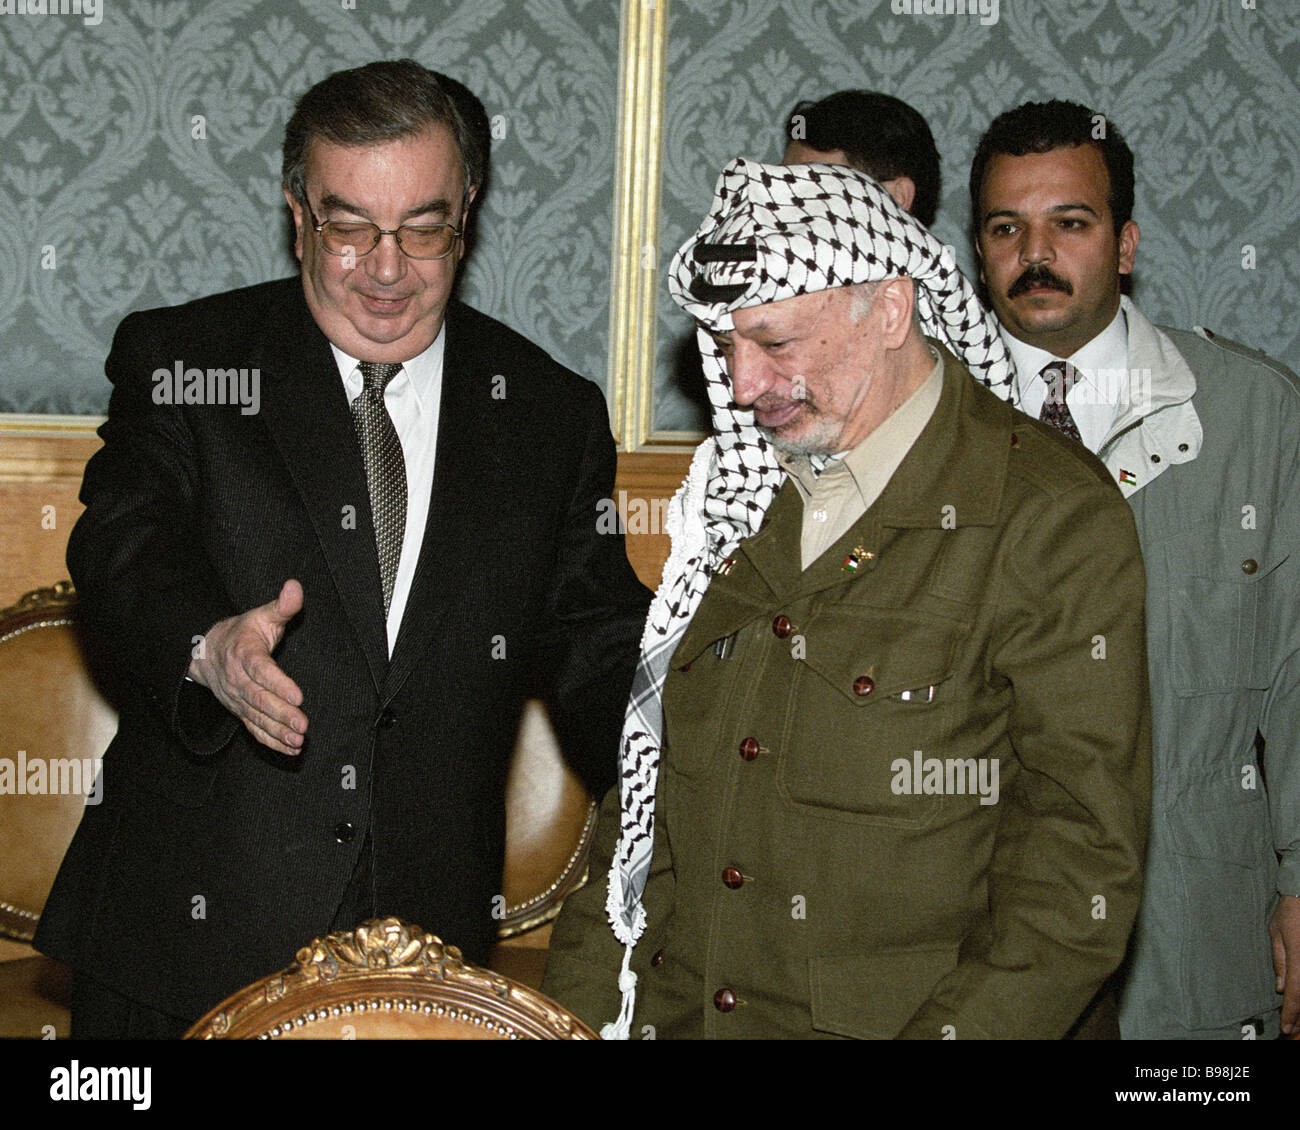 y-primakov-left-and-leader-of-the-palestine-B98J2E.jpg